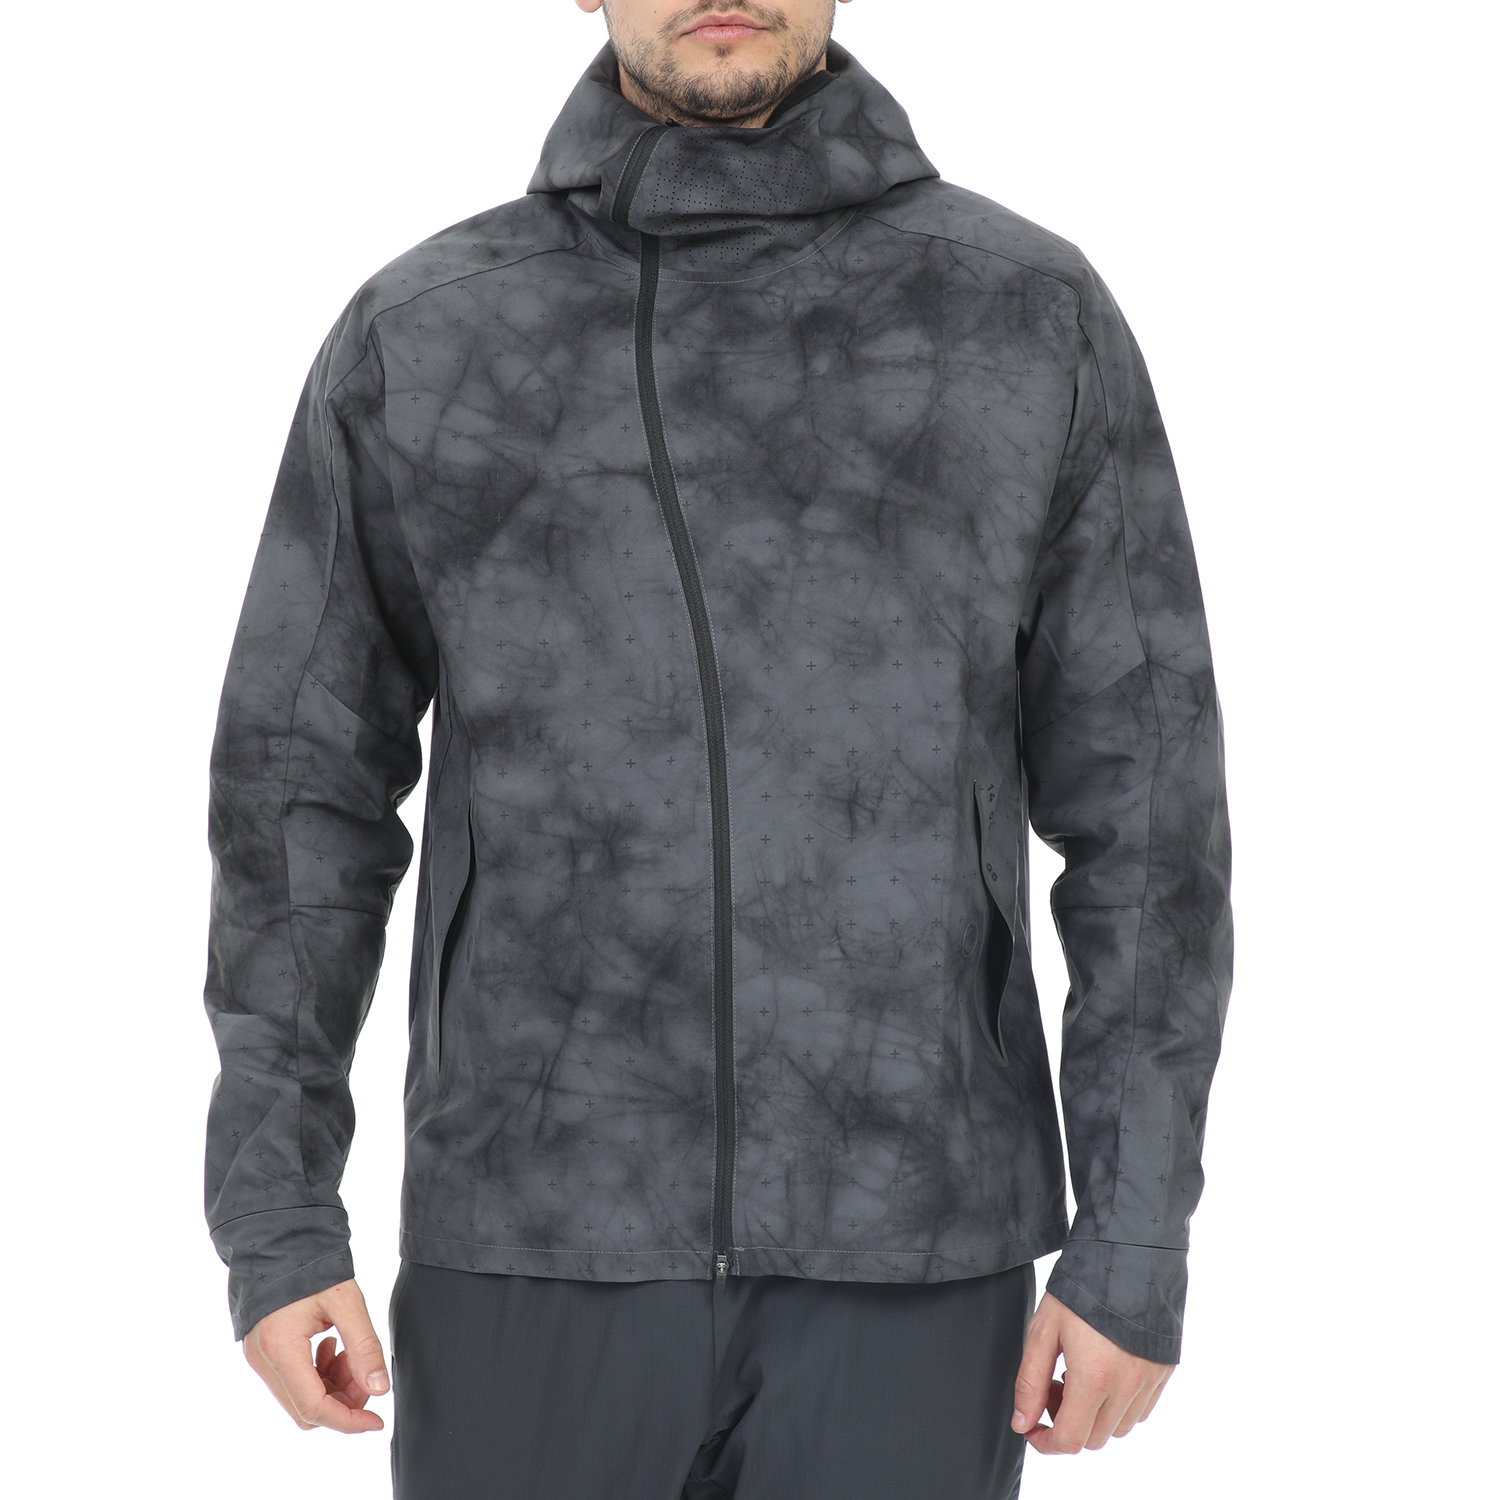 NIKE - Ανδρικό αντιανεμικό jacket NIKE TCH PCK SHIELD JKT FLASH γκρι Ανδρικά/Ρούχα/Πανωφόρια/Τζάκετς